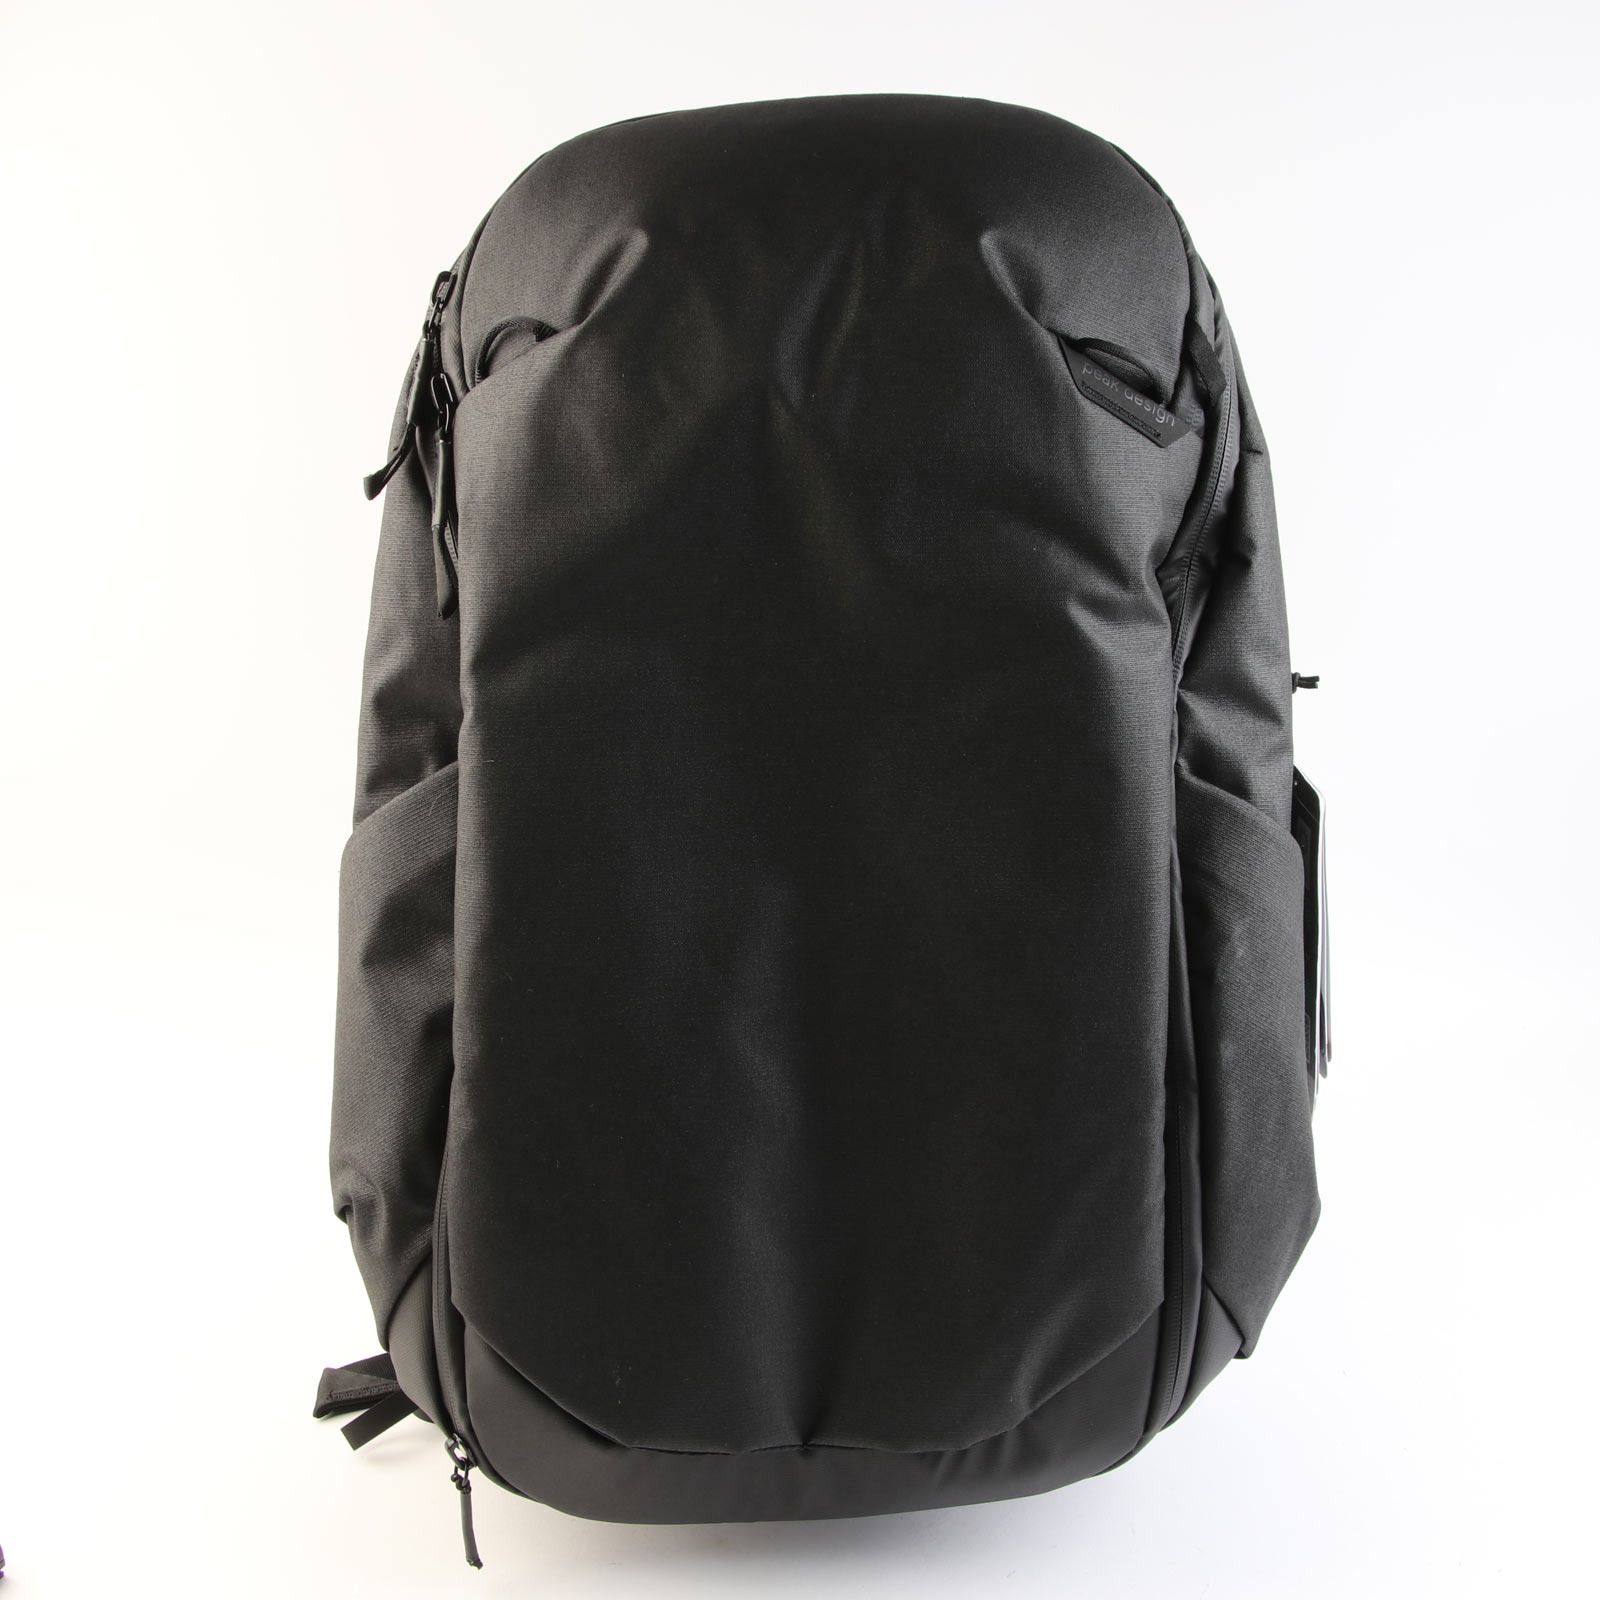 USED Peak Design Travel Backpack 30L - Black